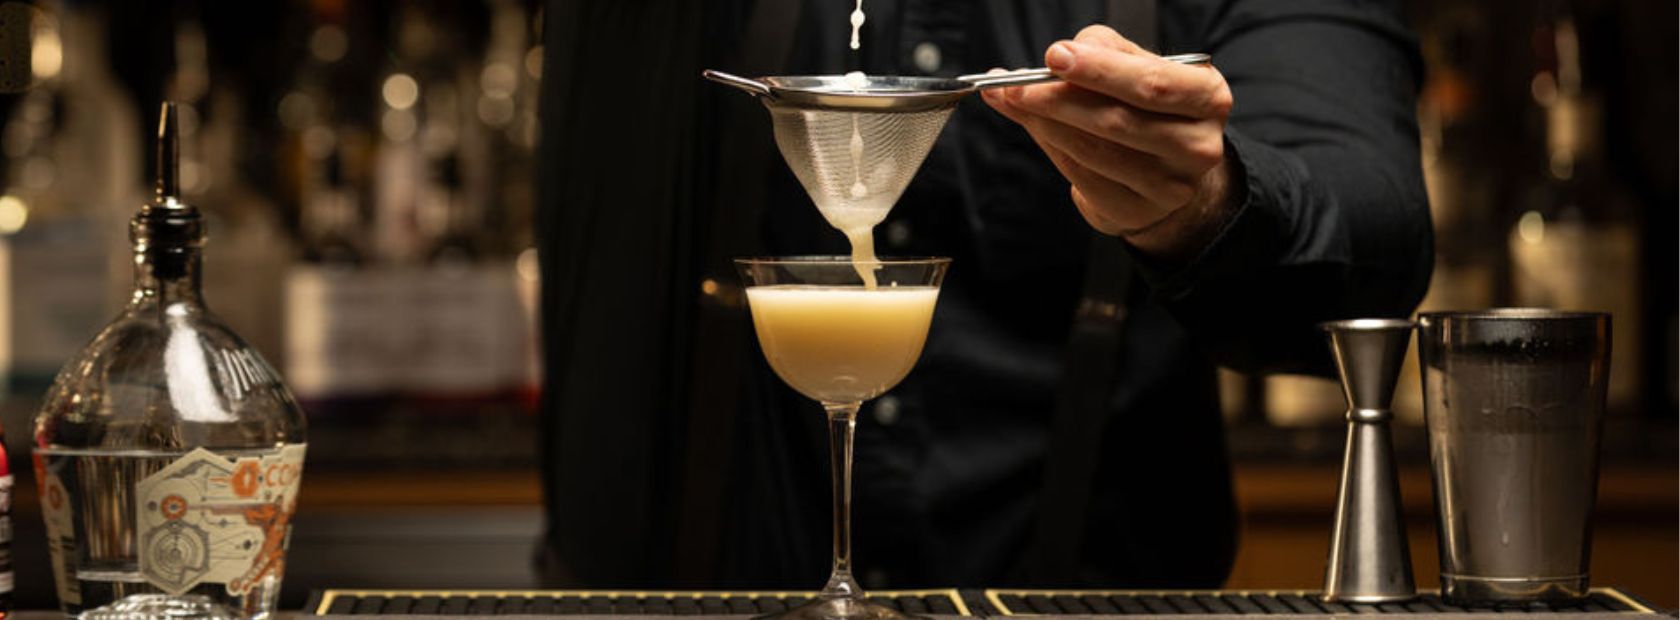 close up shot of bartender preparing a cocktail at the bar